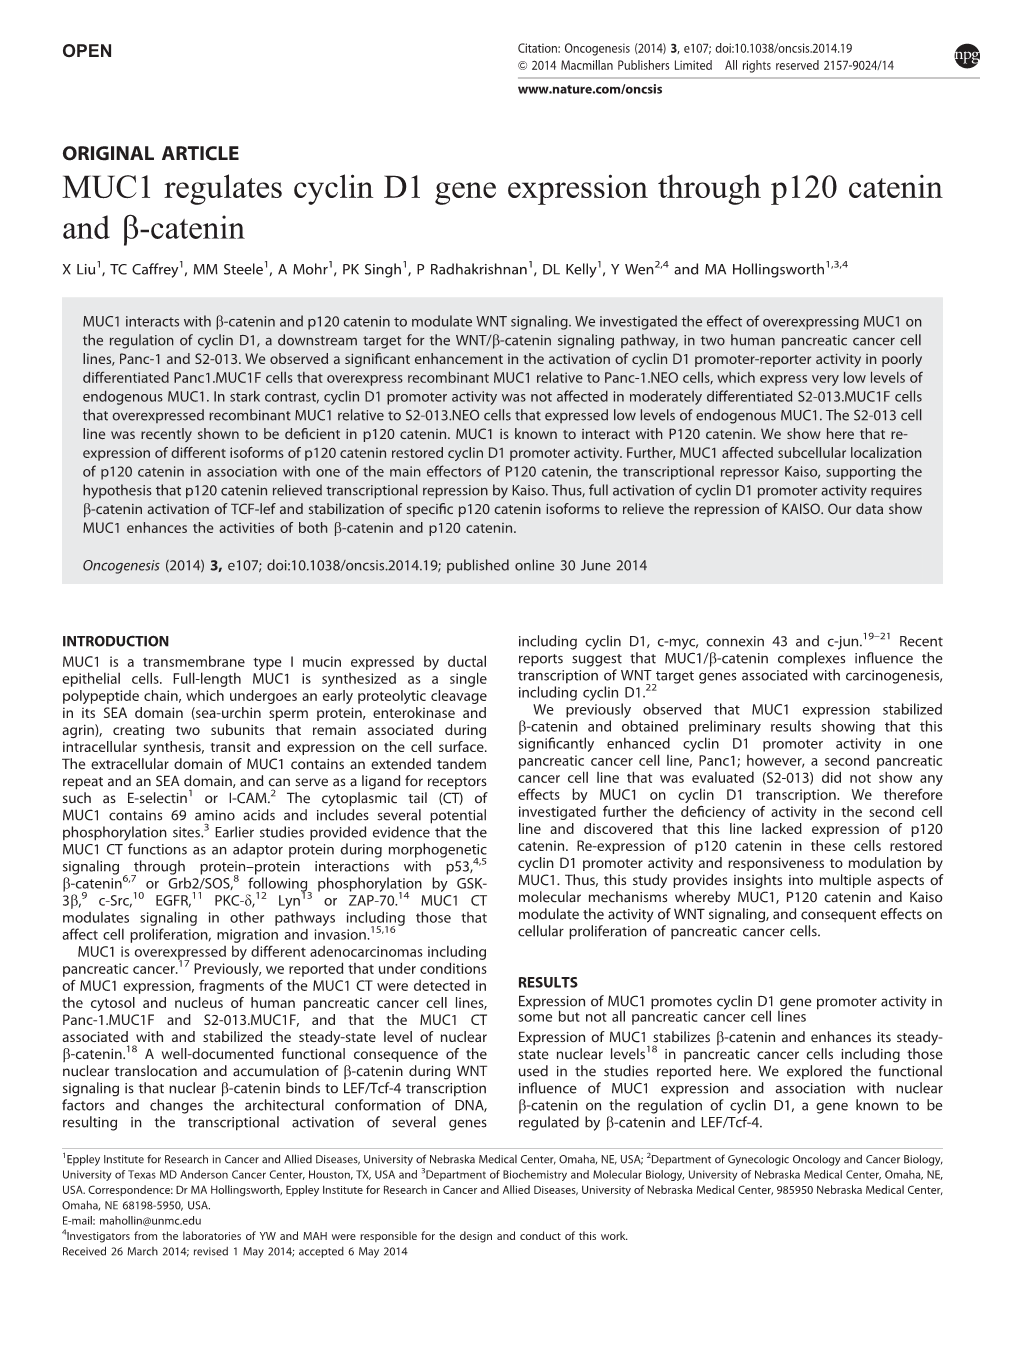 MUC1 Regulates Cyclin D1 Gene Expression Through P120 Catenin and B-Catenin